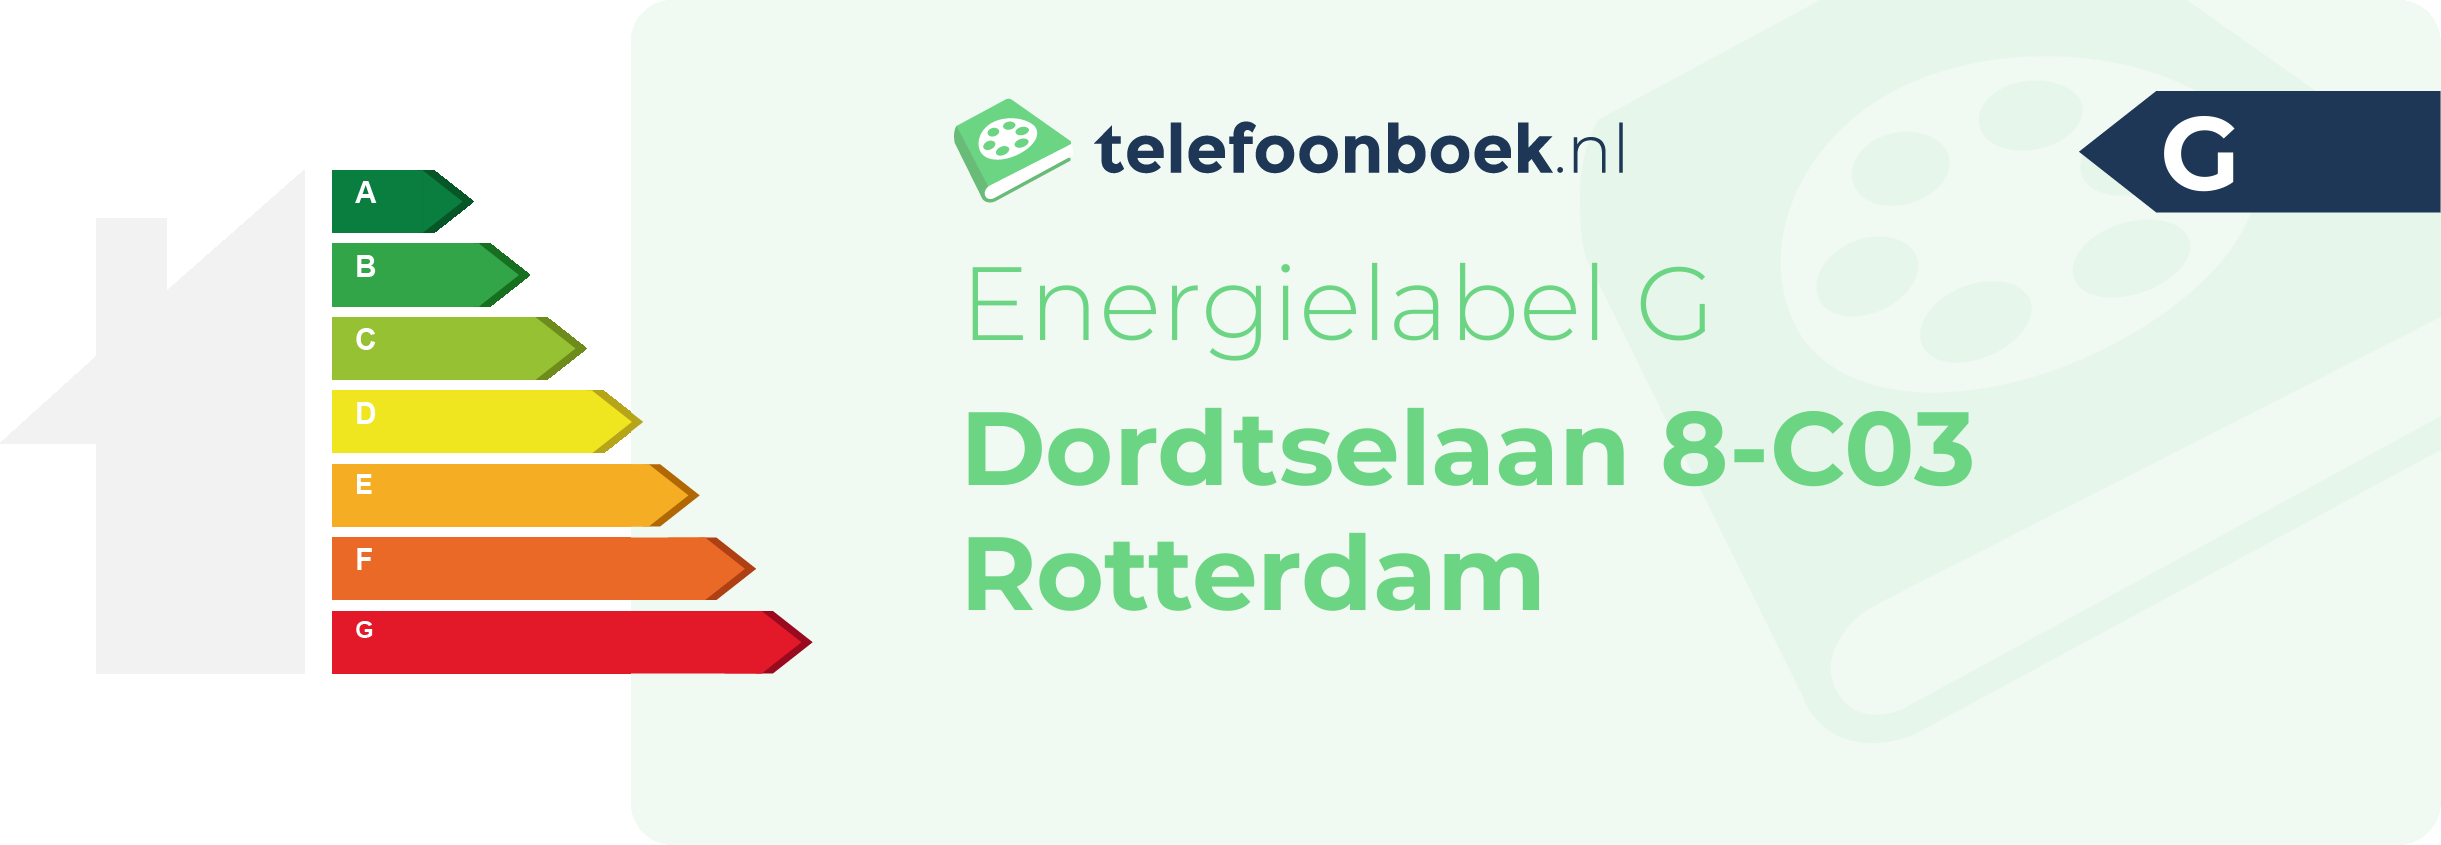 Energielabel Dordtselaan 8-C03 Rotterdam